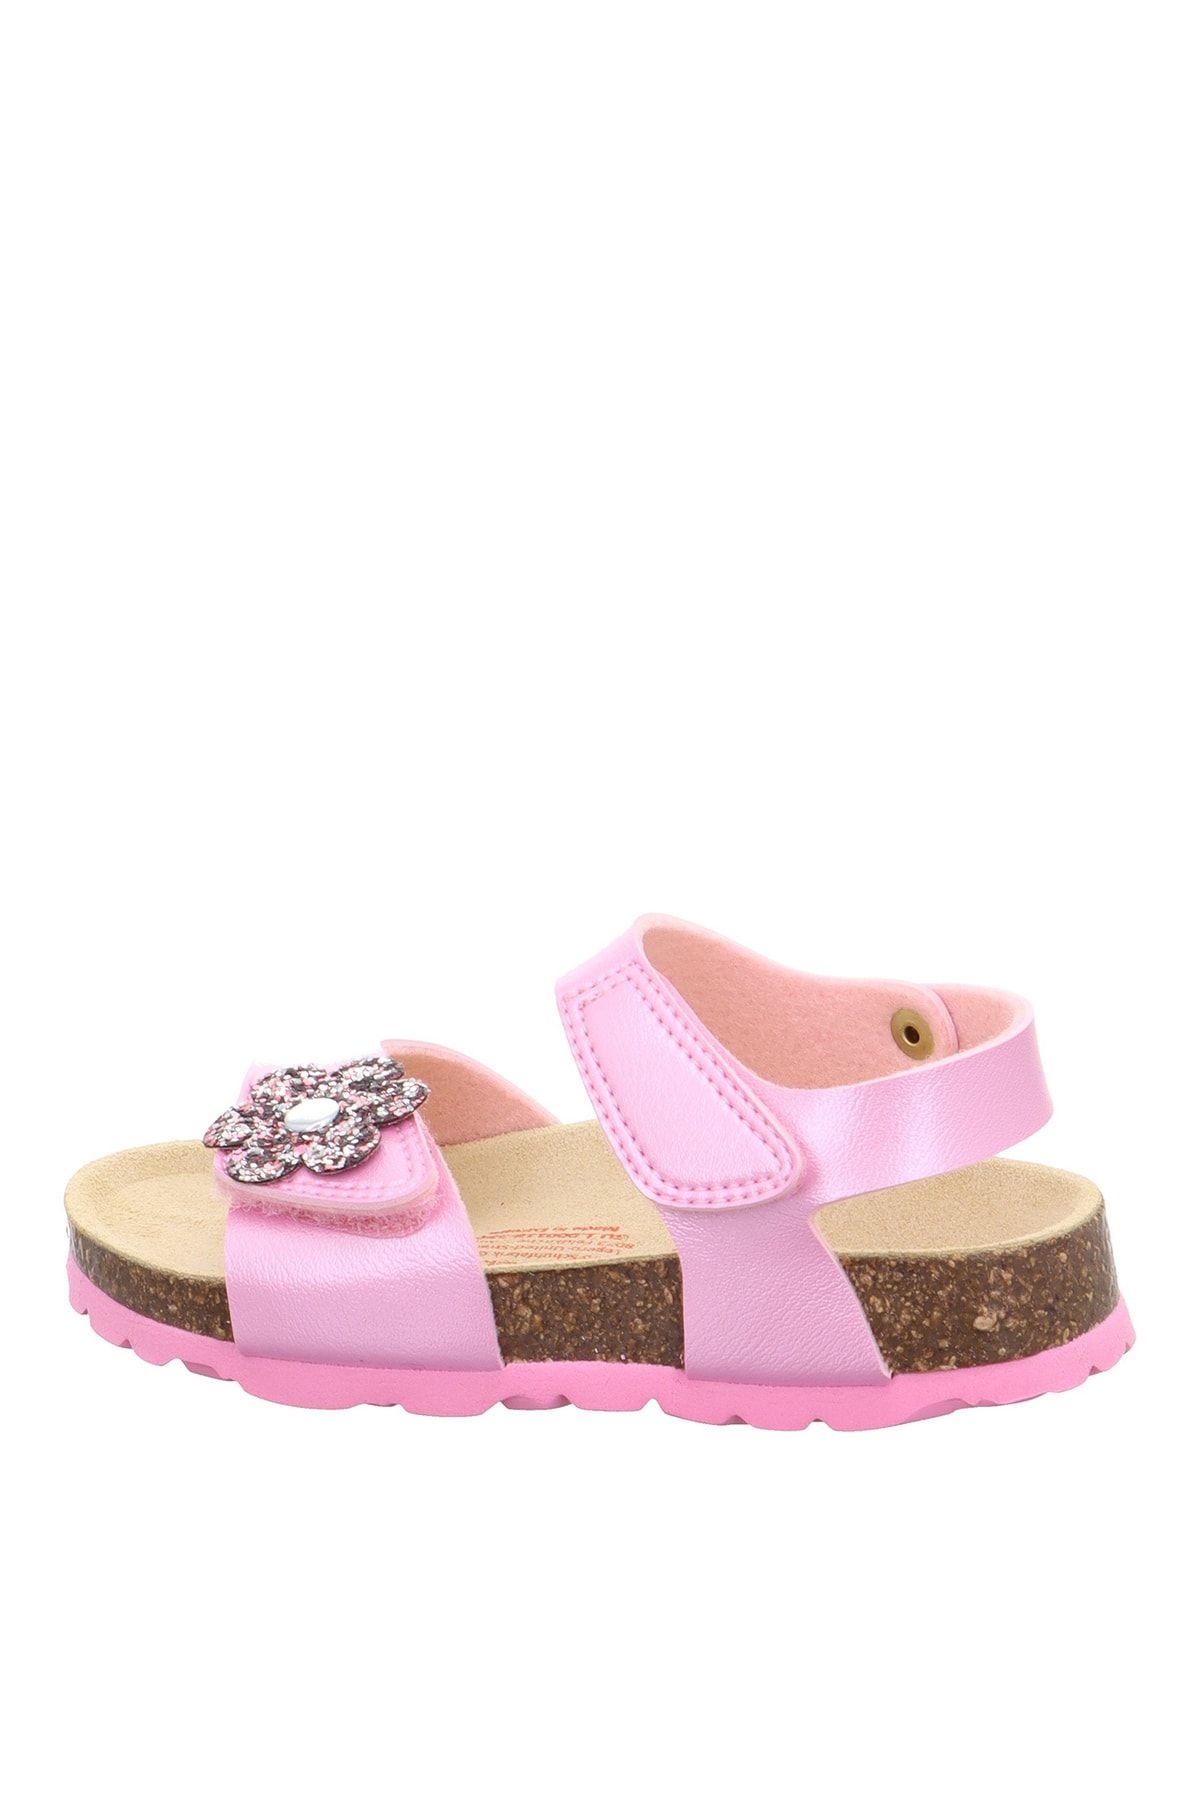 Superfit Koyu Pembe Kız Çocuk Sandalet Bıos 1-000118-5500-3